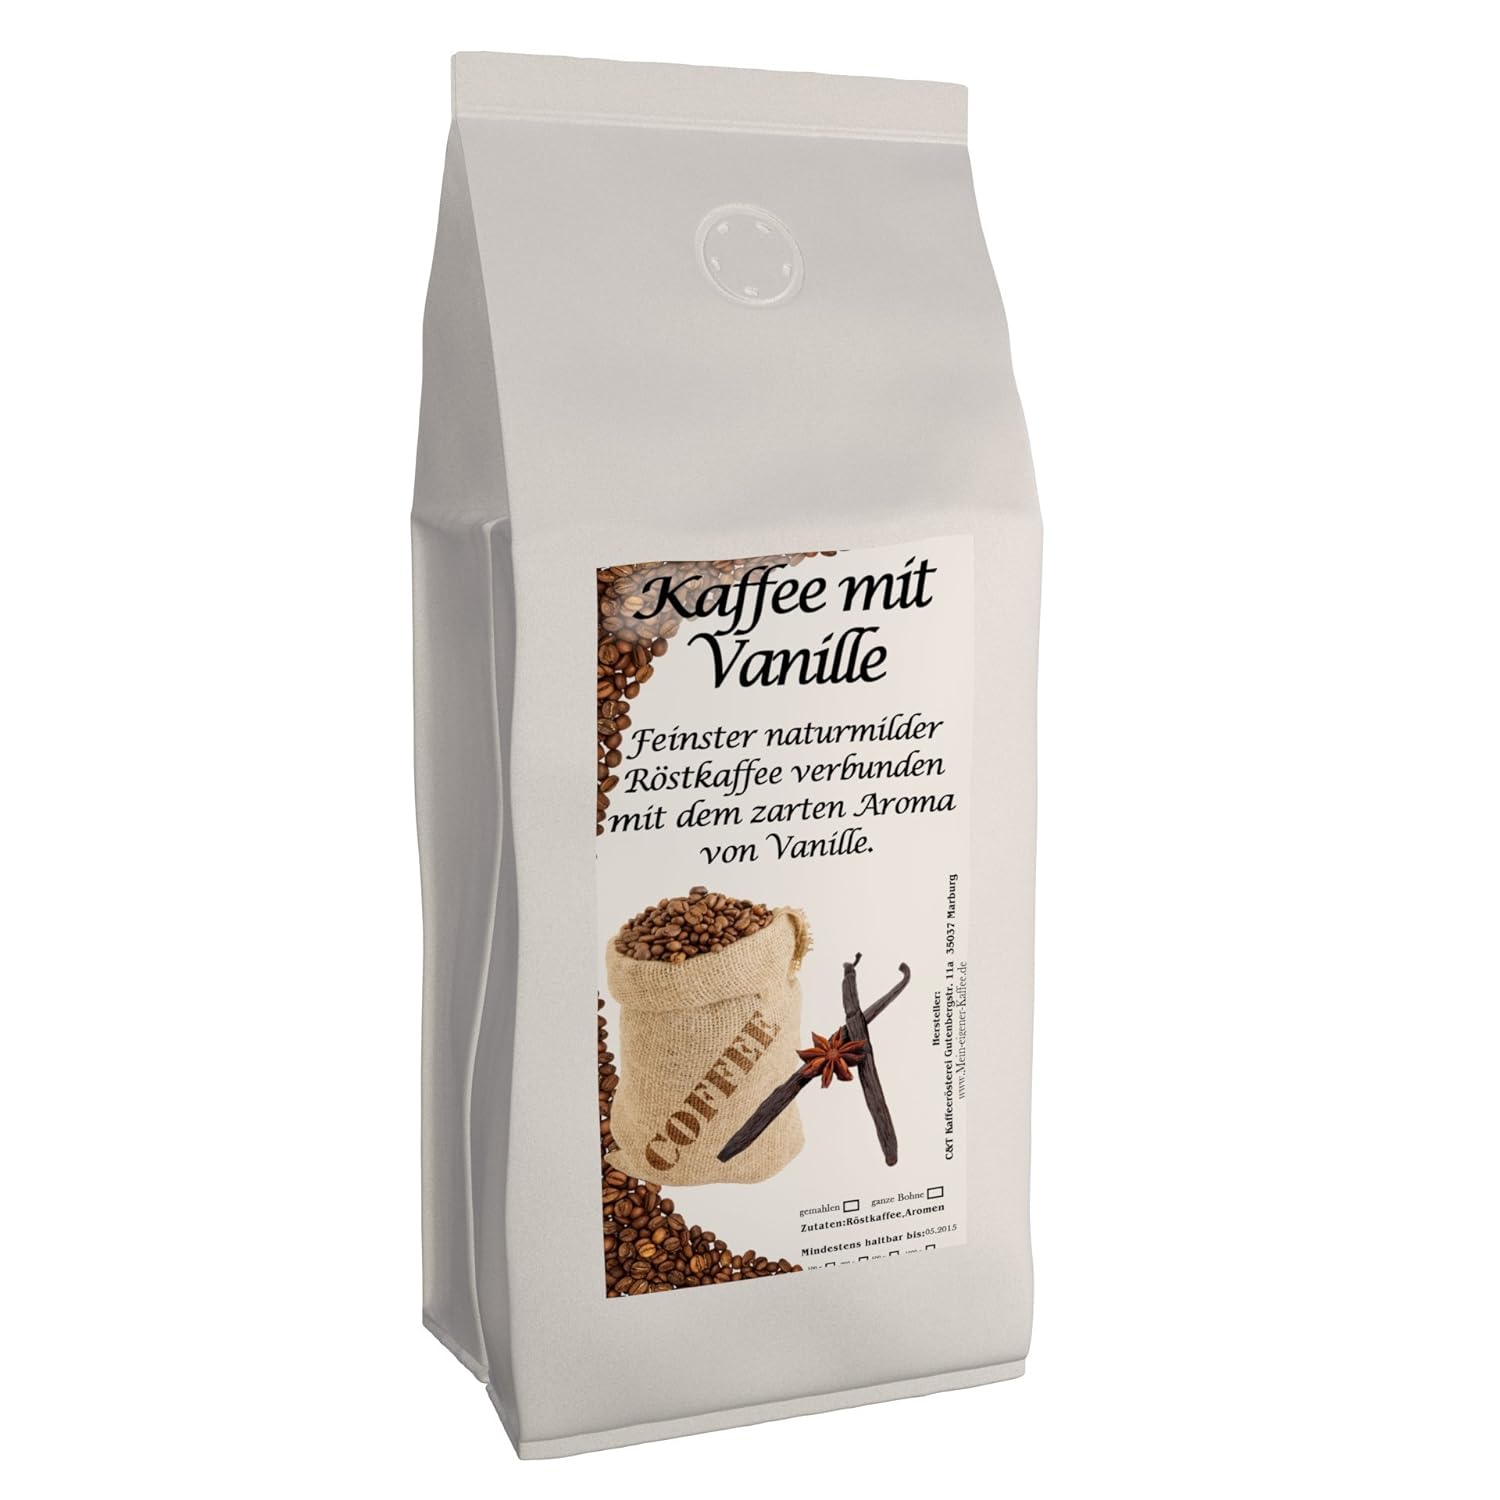 Vanilla Coffee/flavored coffee with Vanilla 500 g Whole Bean